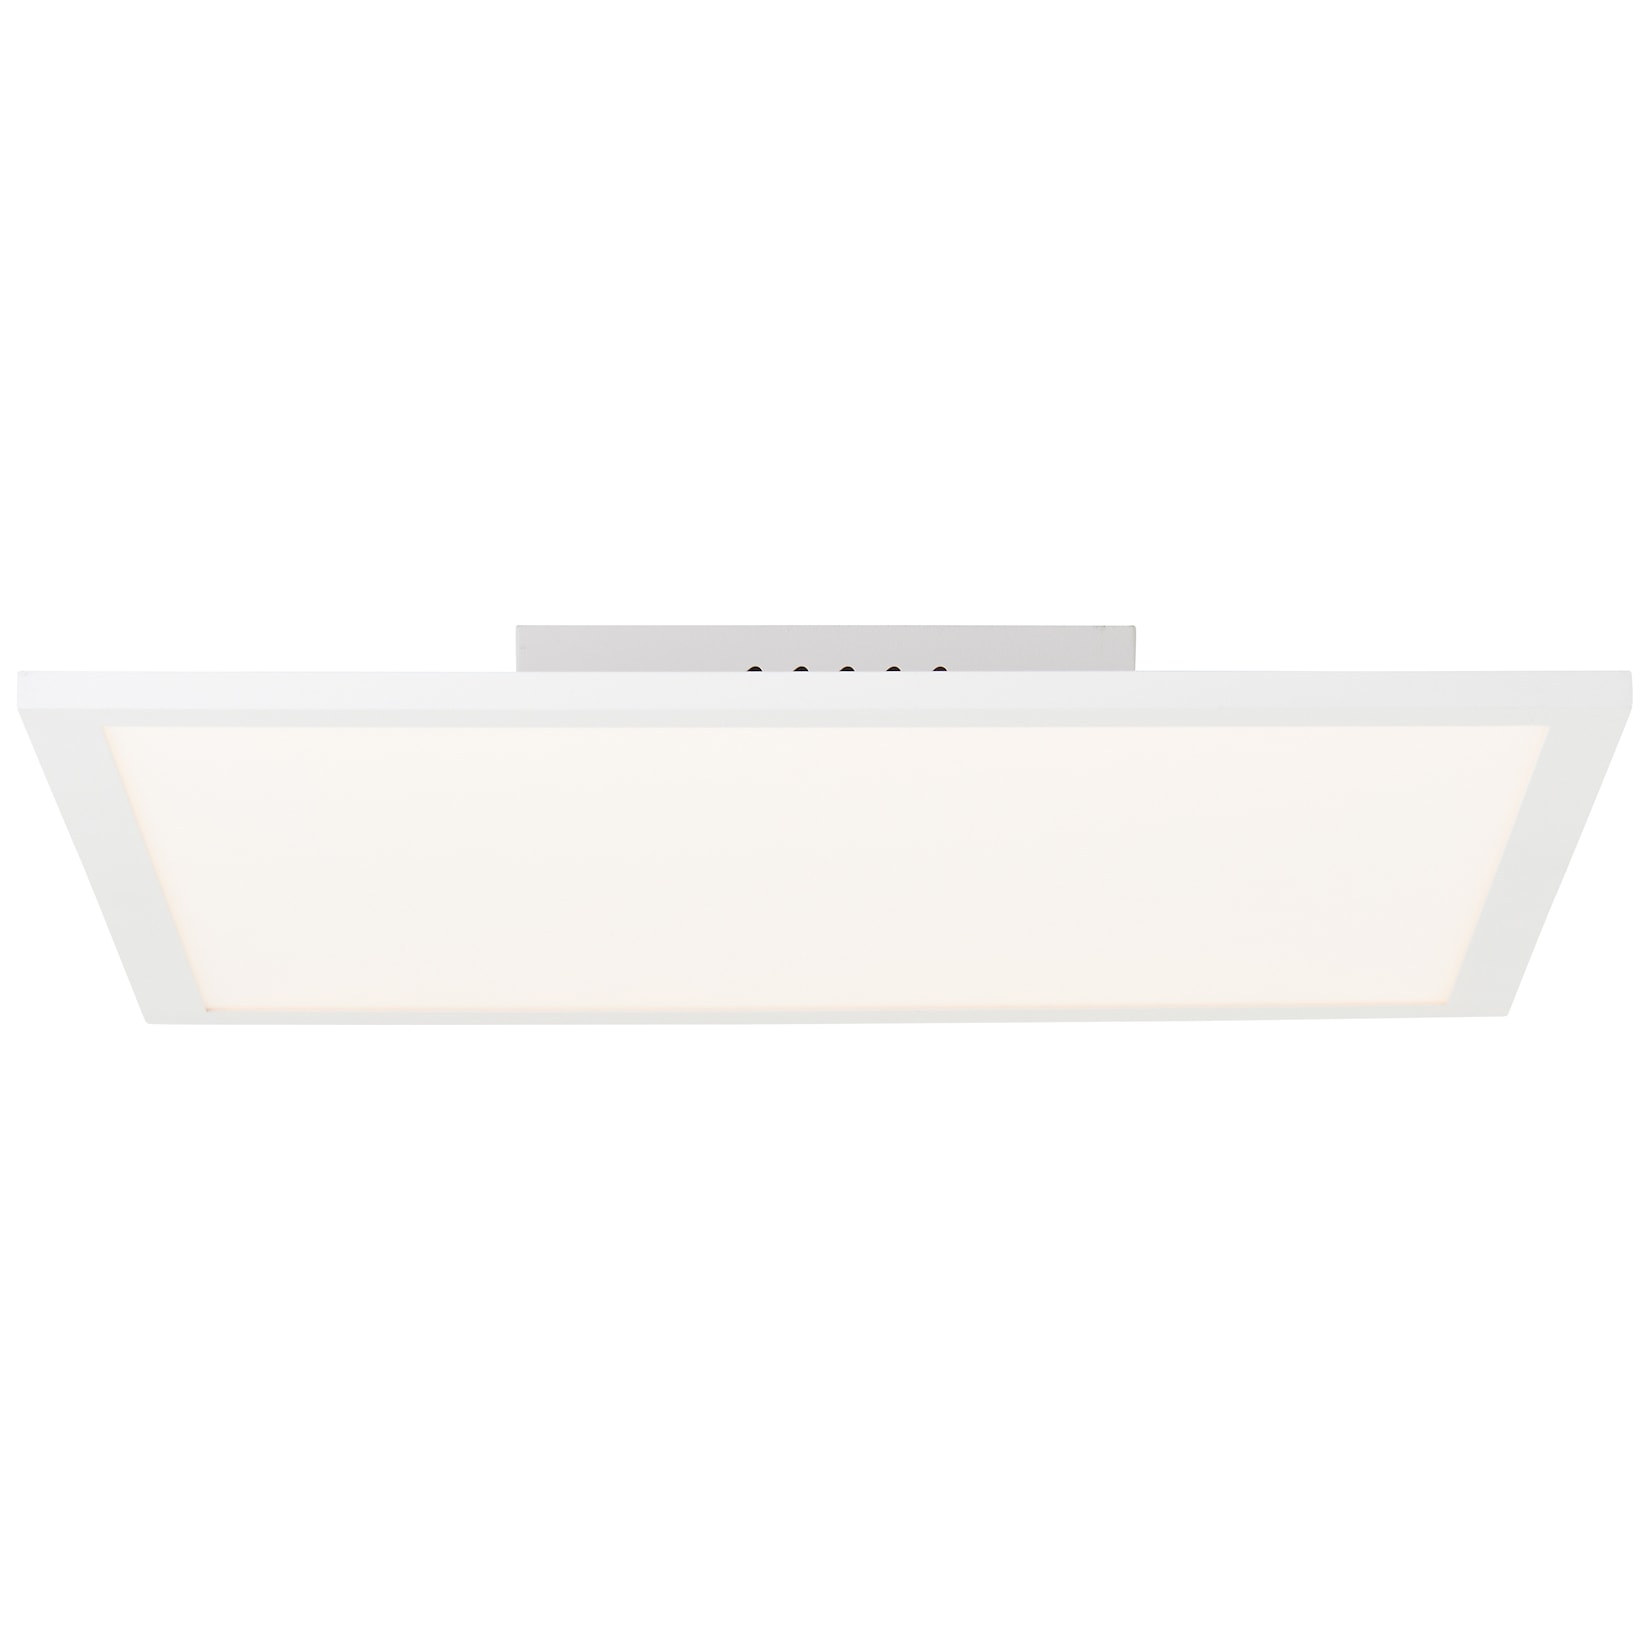 Brilliant Jacinda LED Deckenaufbau-Paneel 40x40cm sand weiß, Metall/Kunststoff, 1x 26 W LED integriert, (Lichtstrom: 230